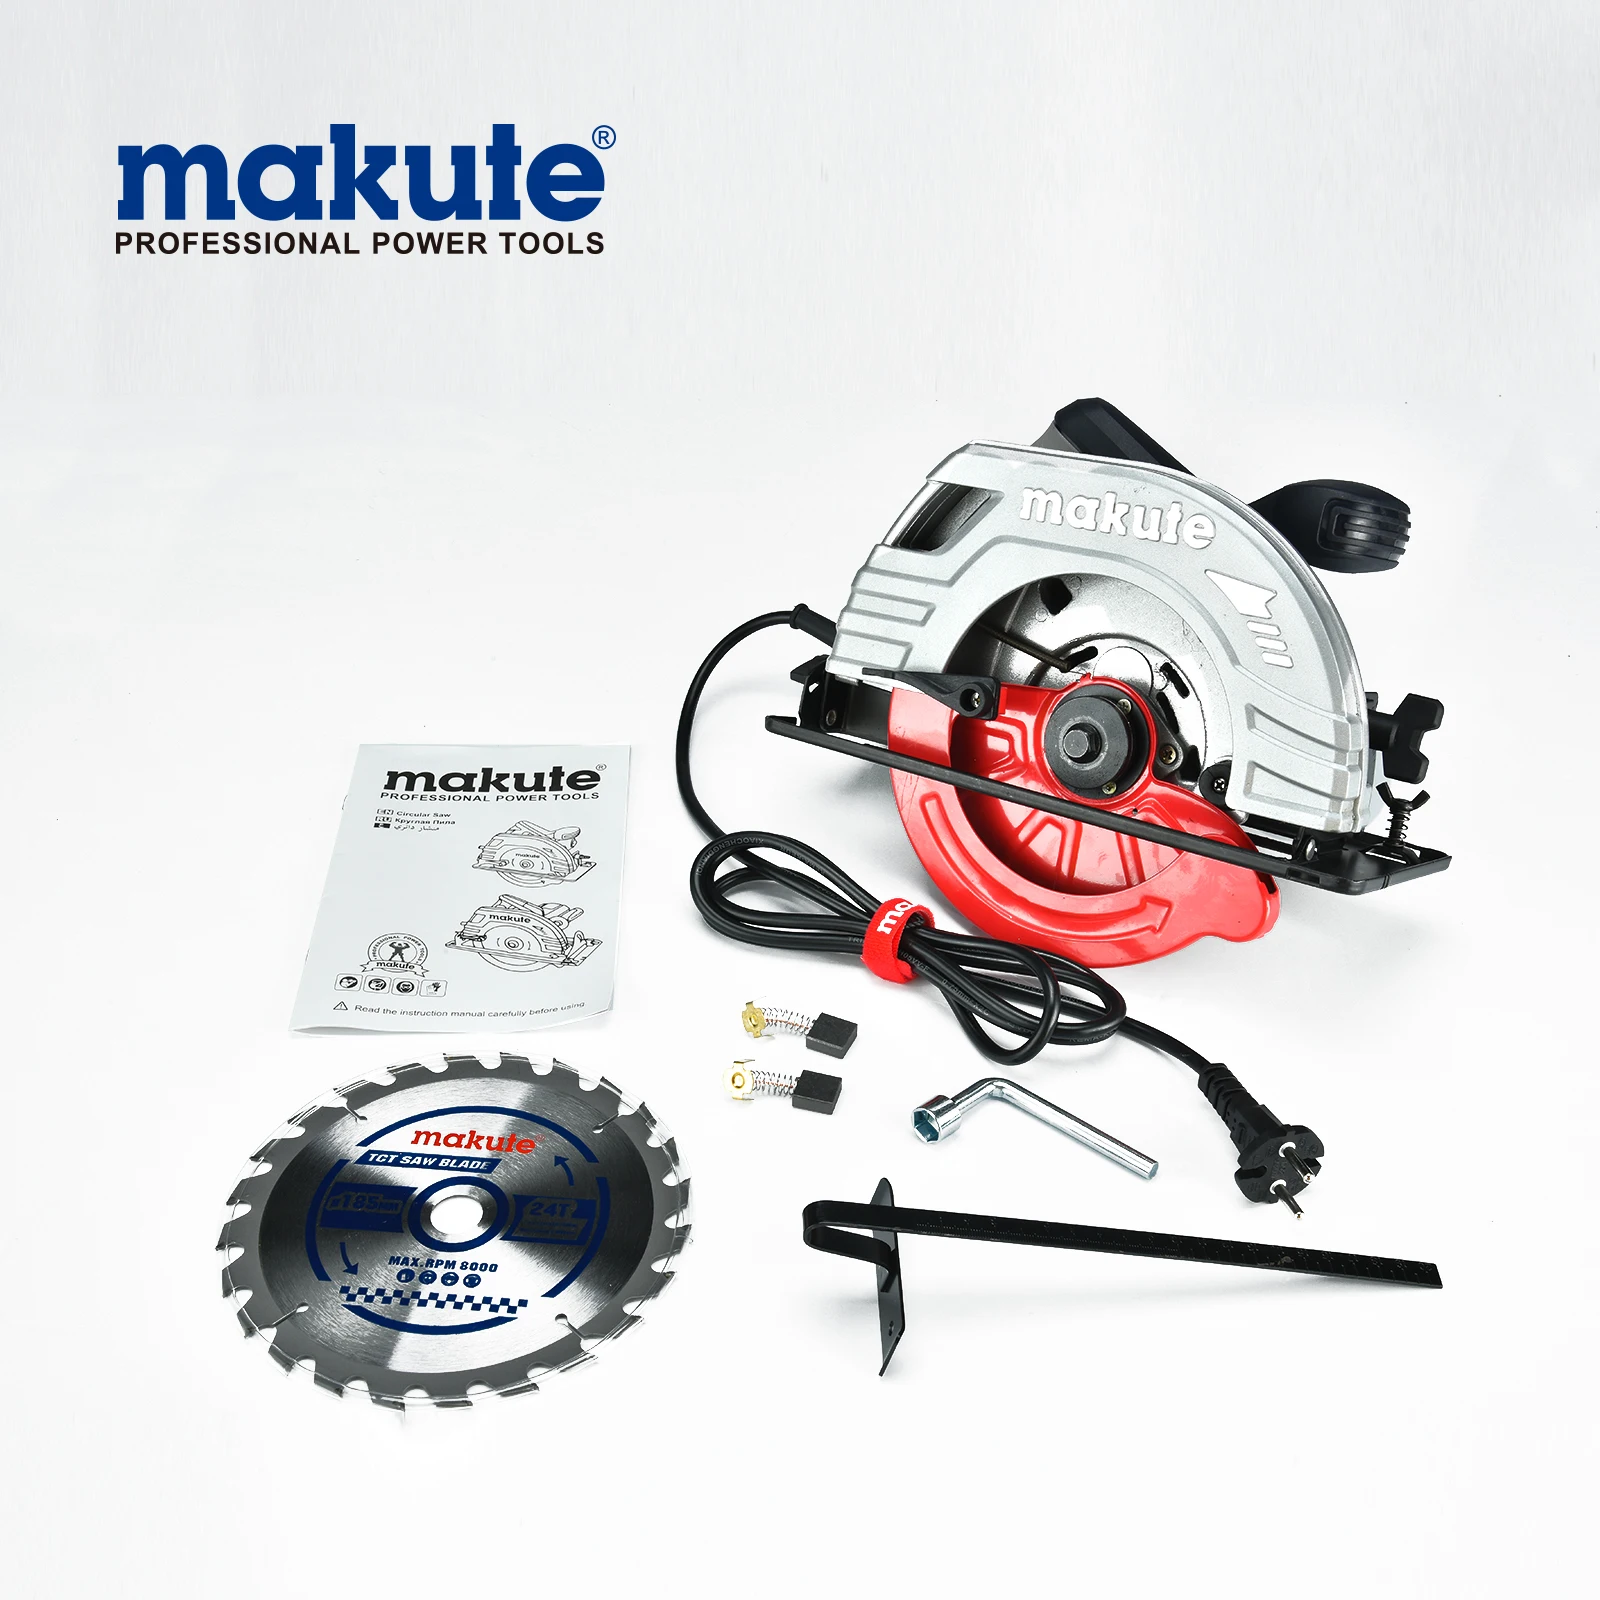 Makute electric circular saw machine CS003 185mm Circular Saw